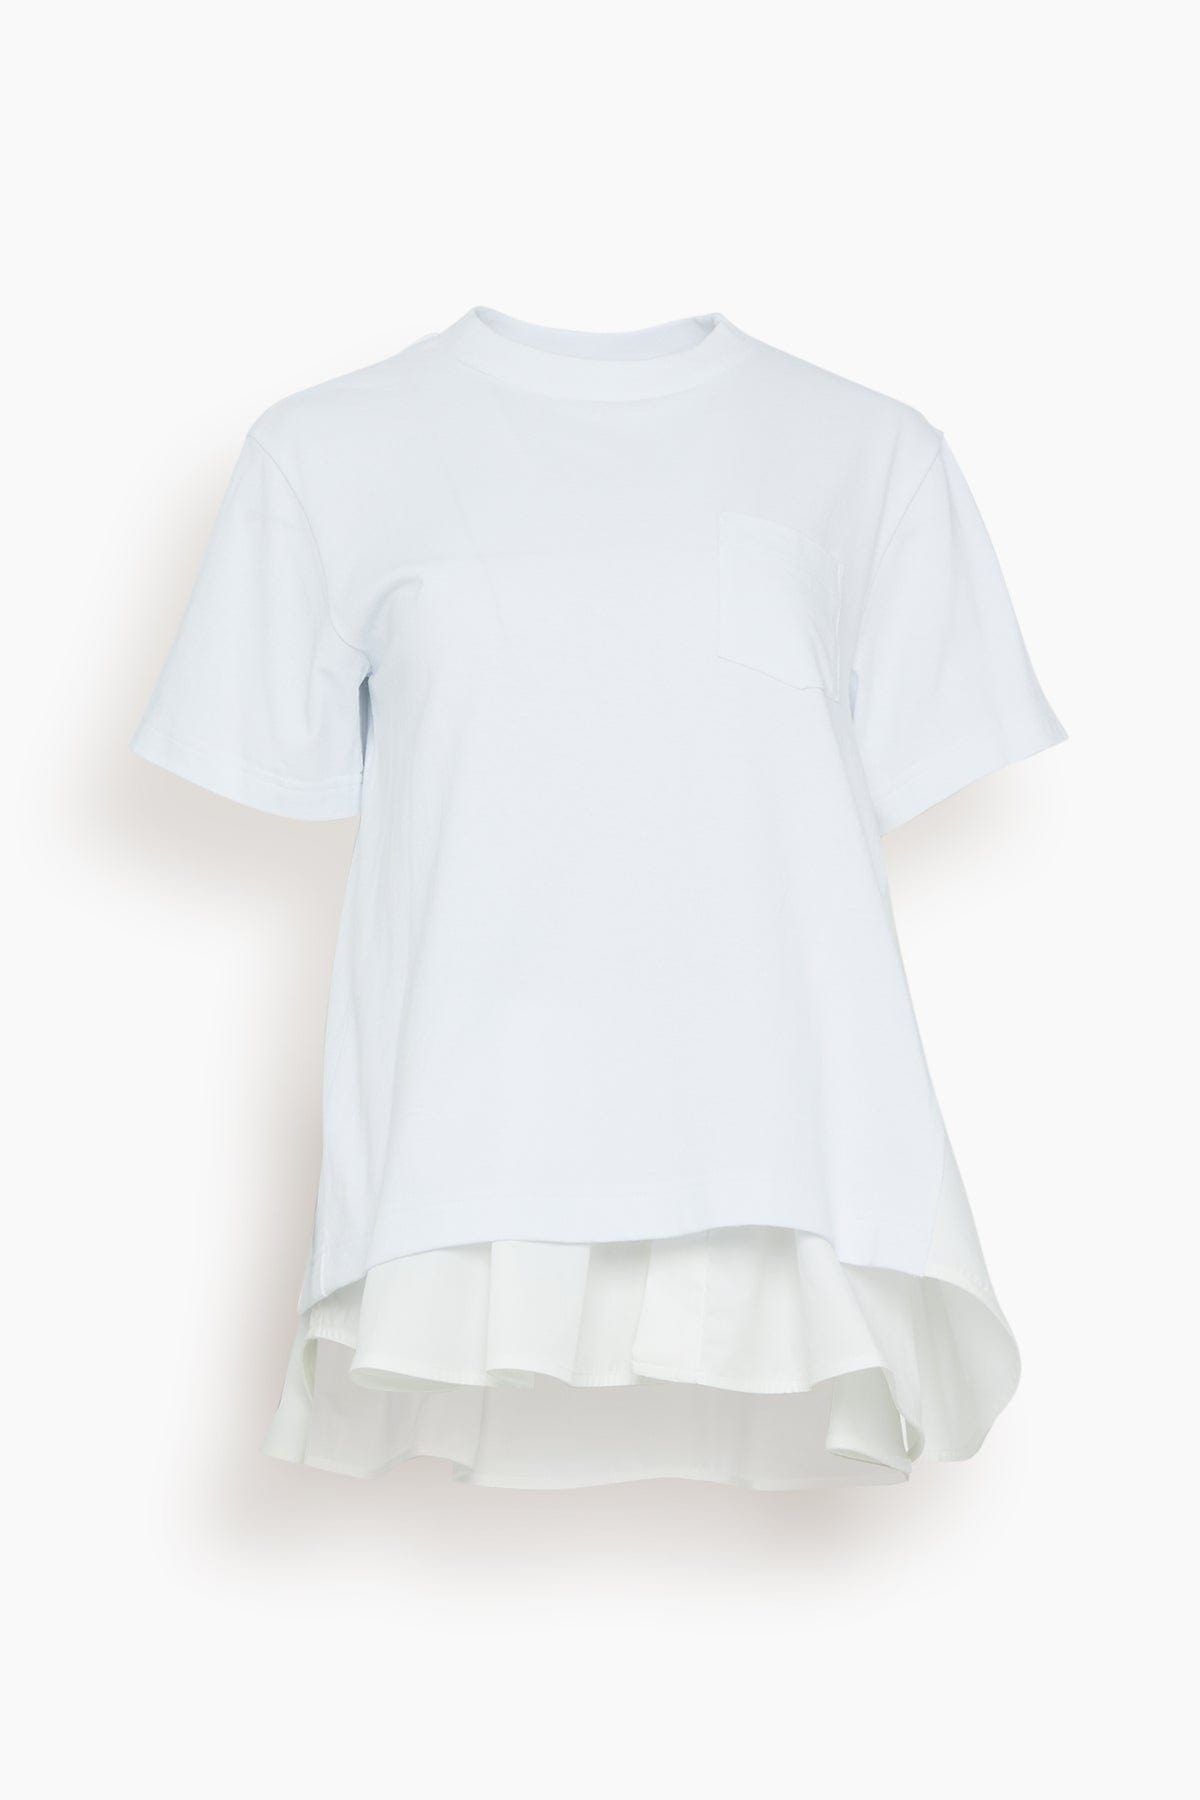 Sacai Cotton Poplin Mix Cotton Jersey T-Shirt in White – Hampden Clothing